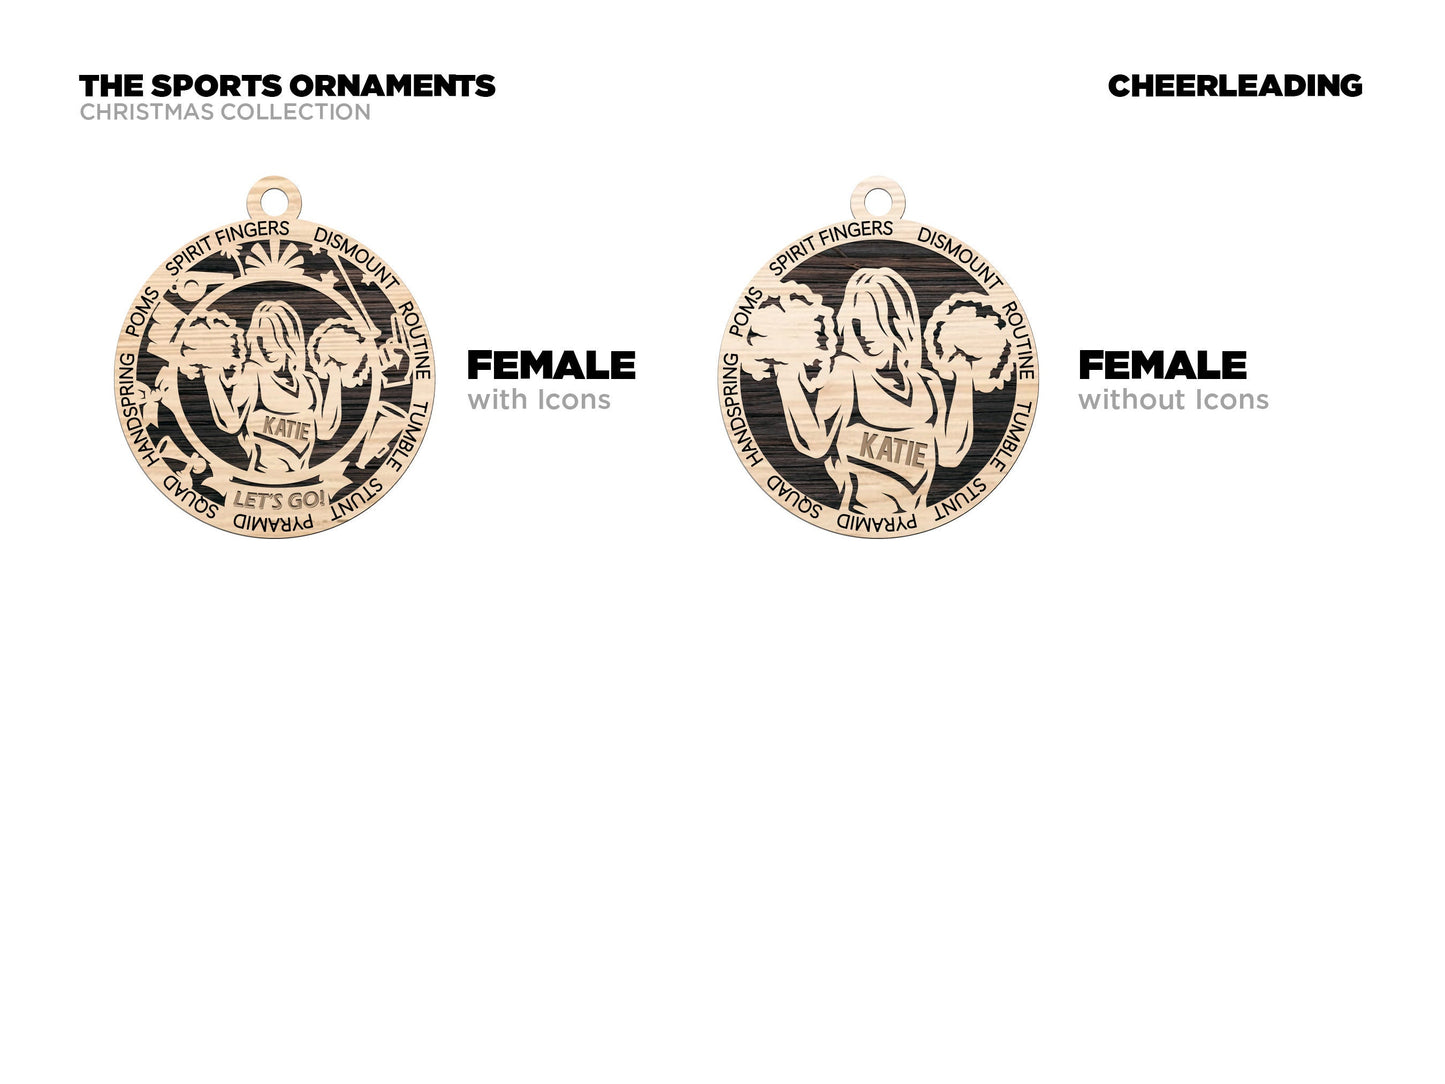 Cheerleading - Stadium Series Ornaments - 2 Unique designs - SVG, PDF, AI File Download - Sized for Glowforge